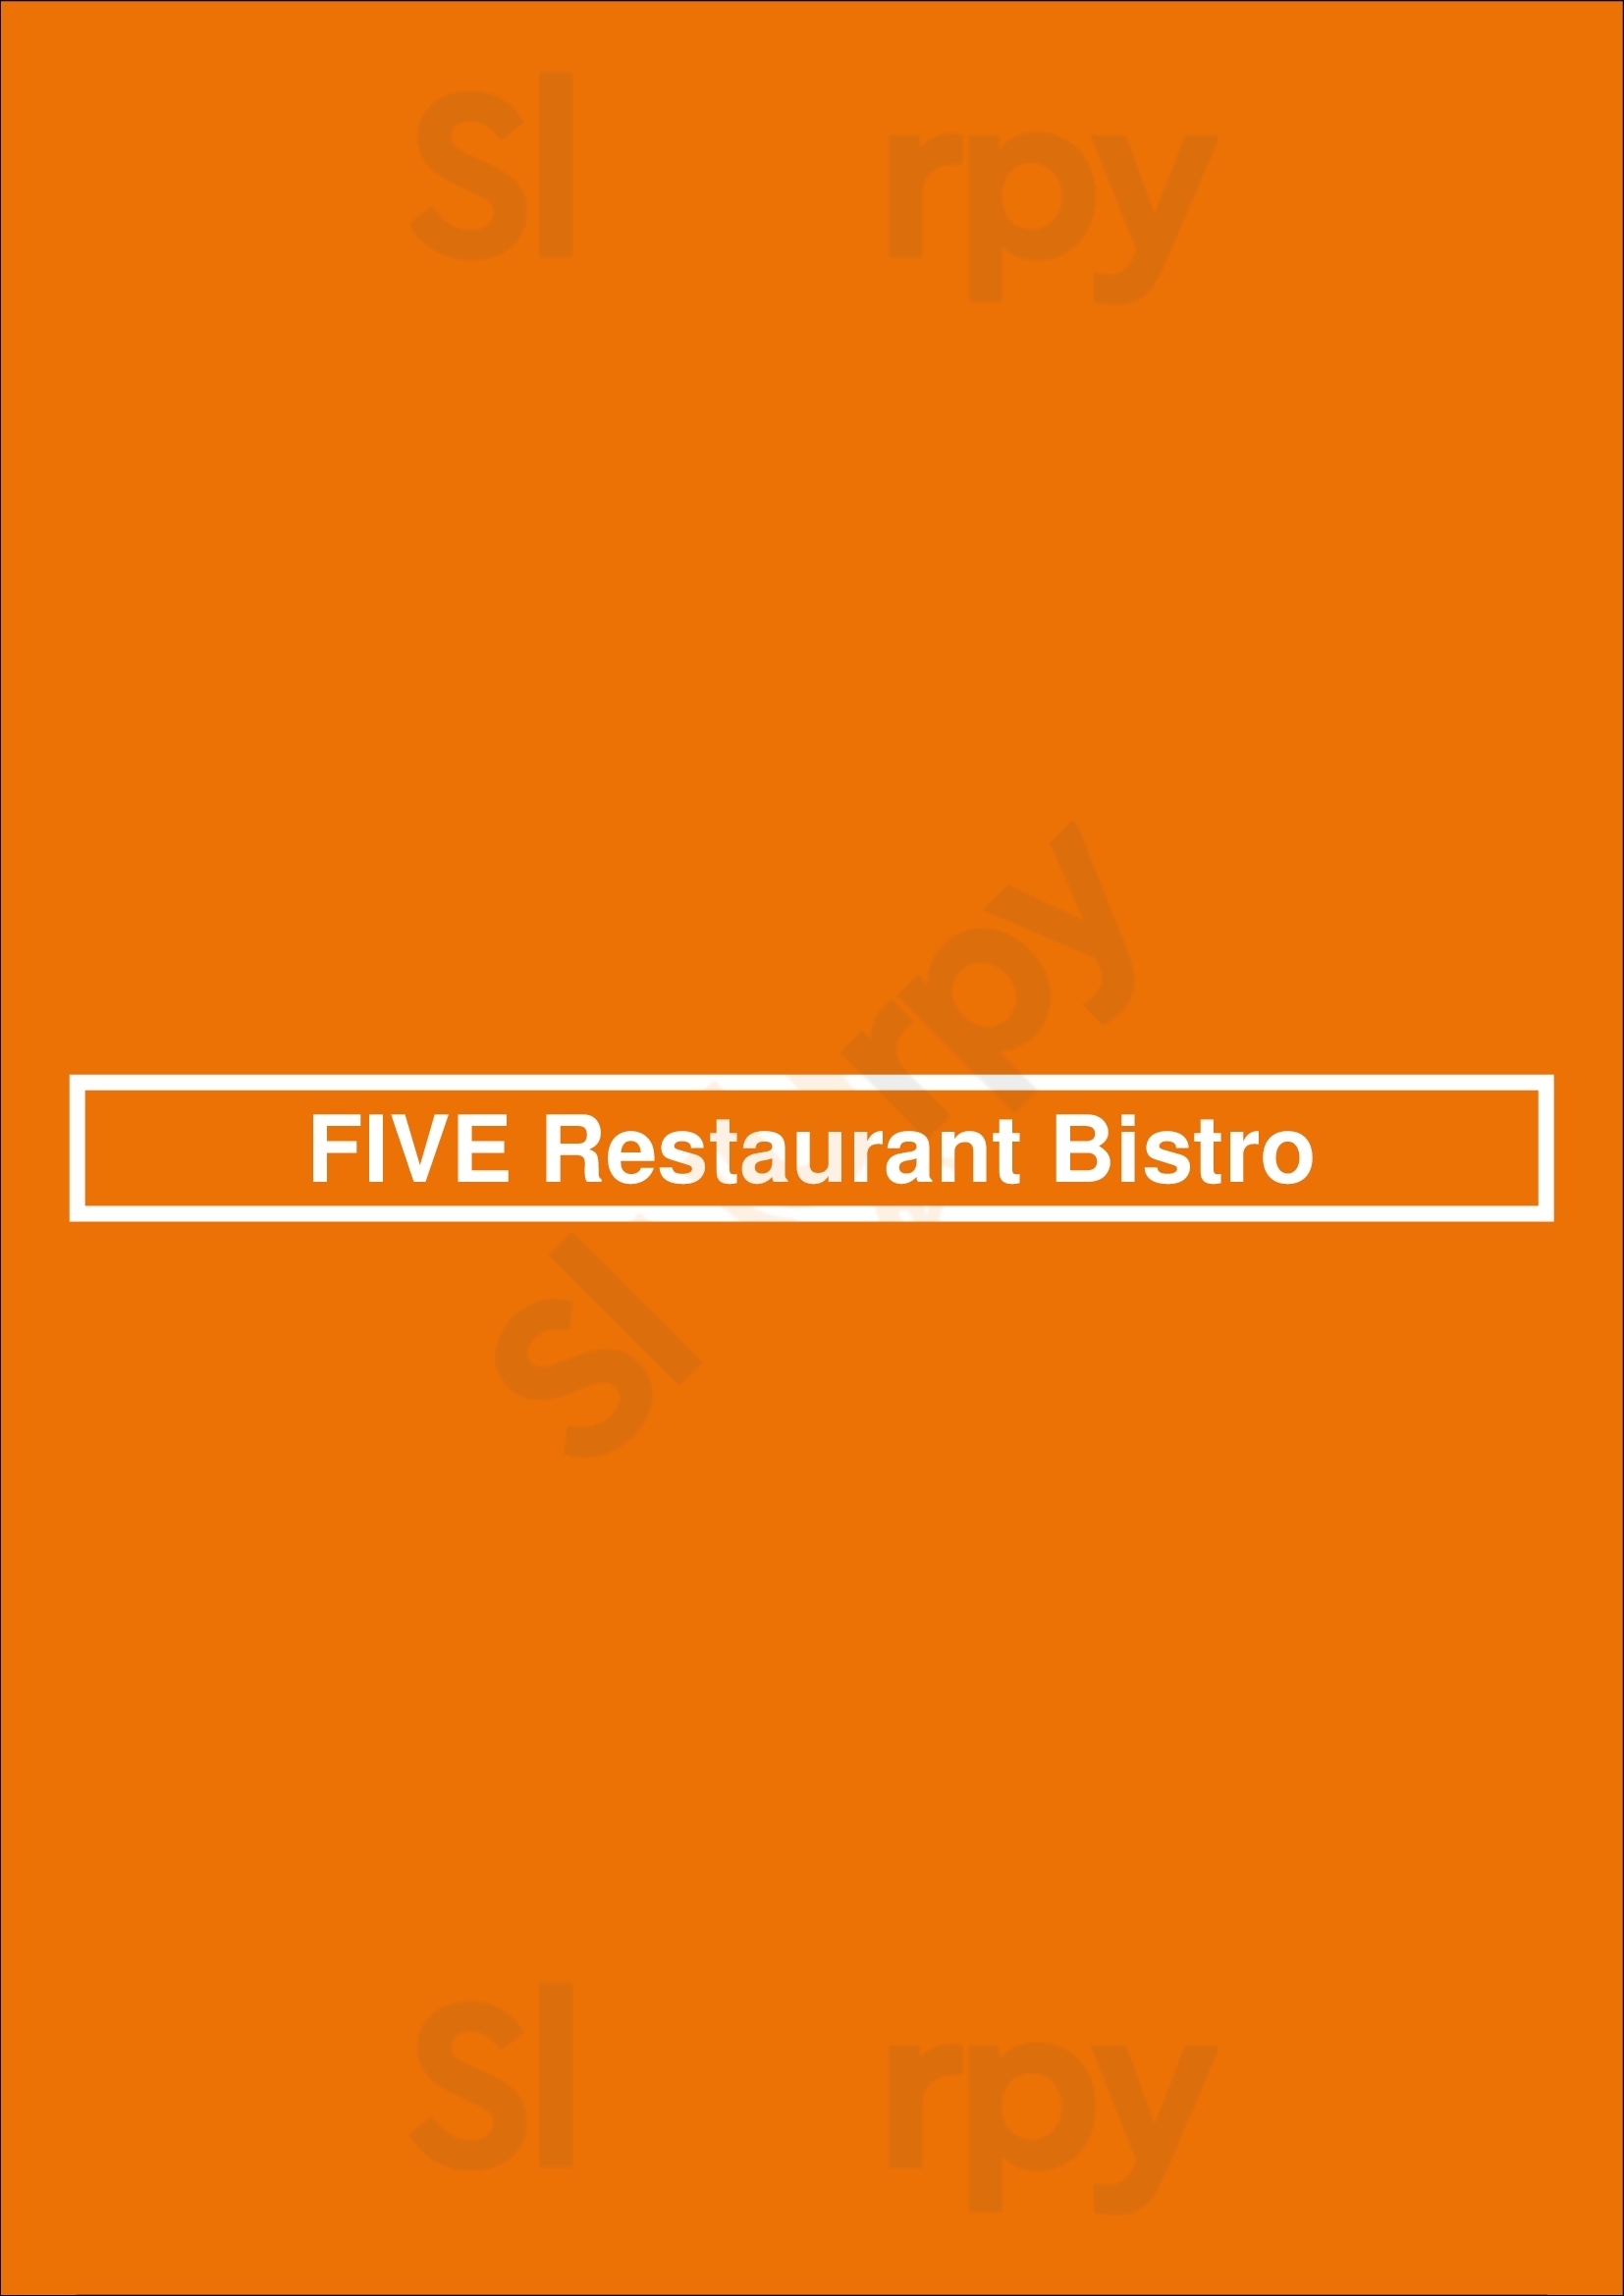 Five Restaurant Bistro Edmonds Menu - 1